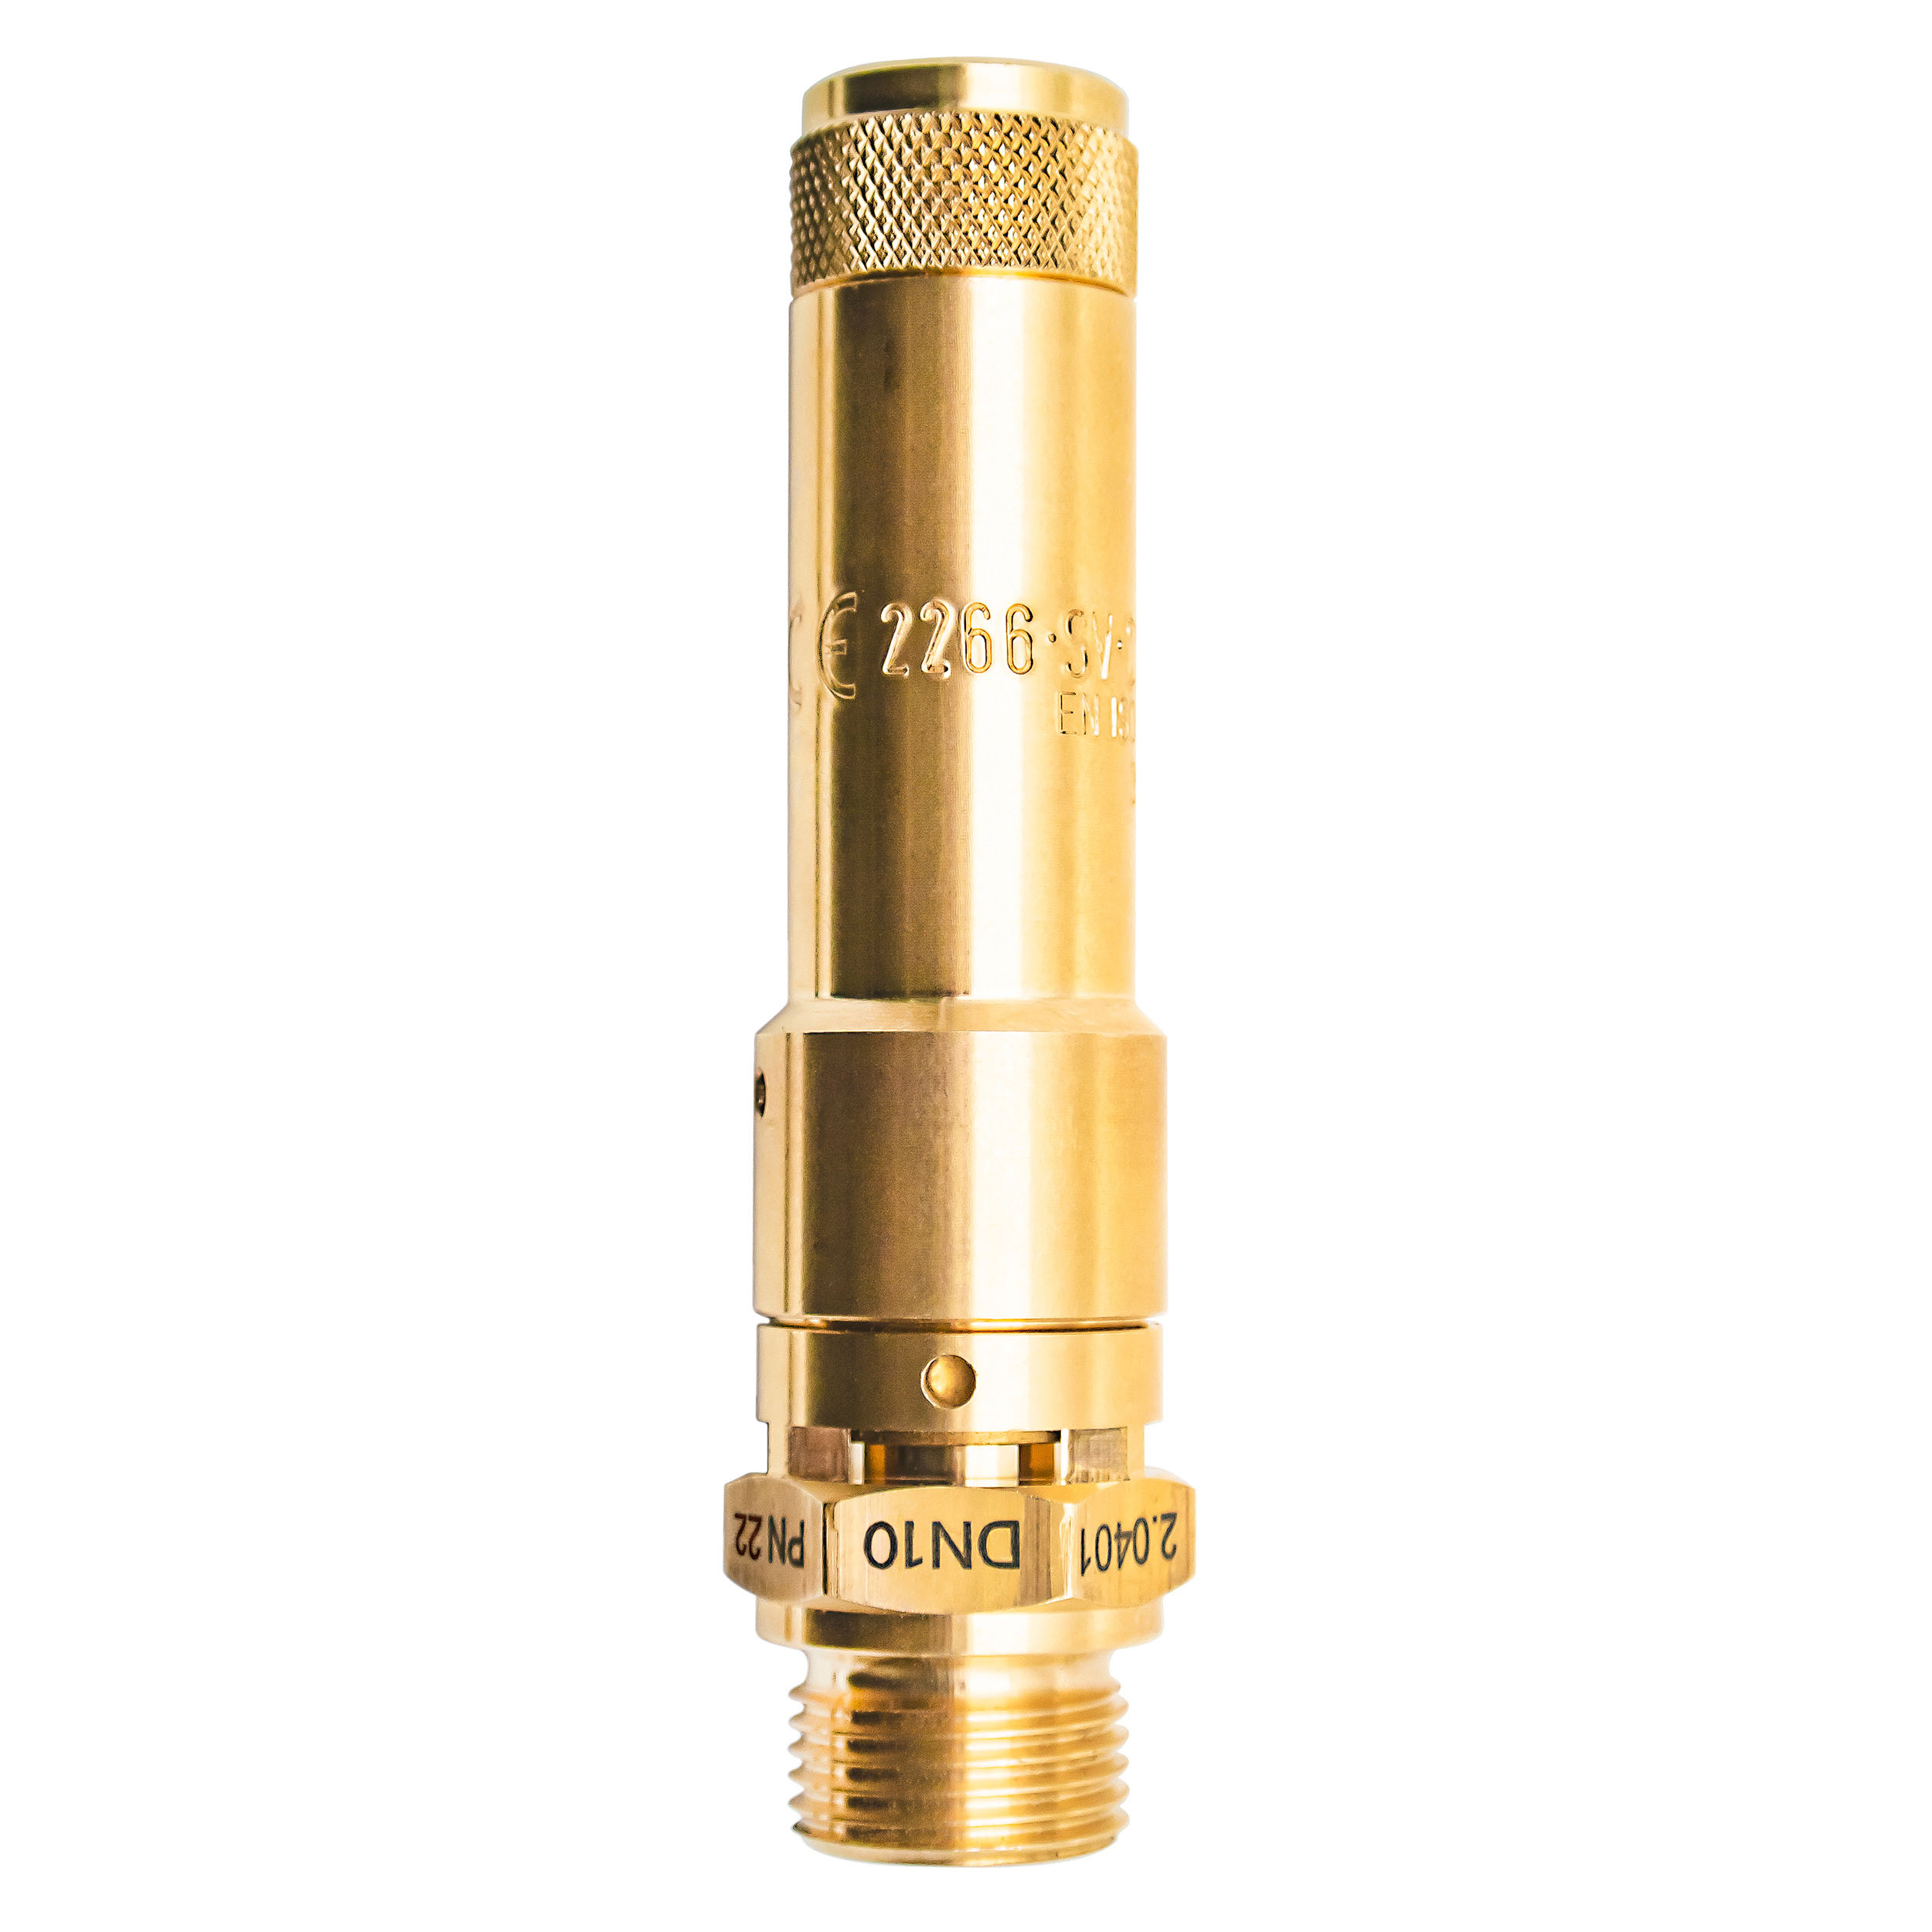 Savety valve component tested DN 10, G¾, set pressure: 8.2 bar (118,9 psi)